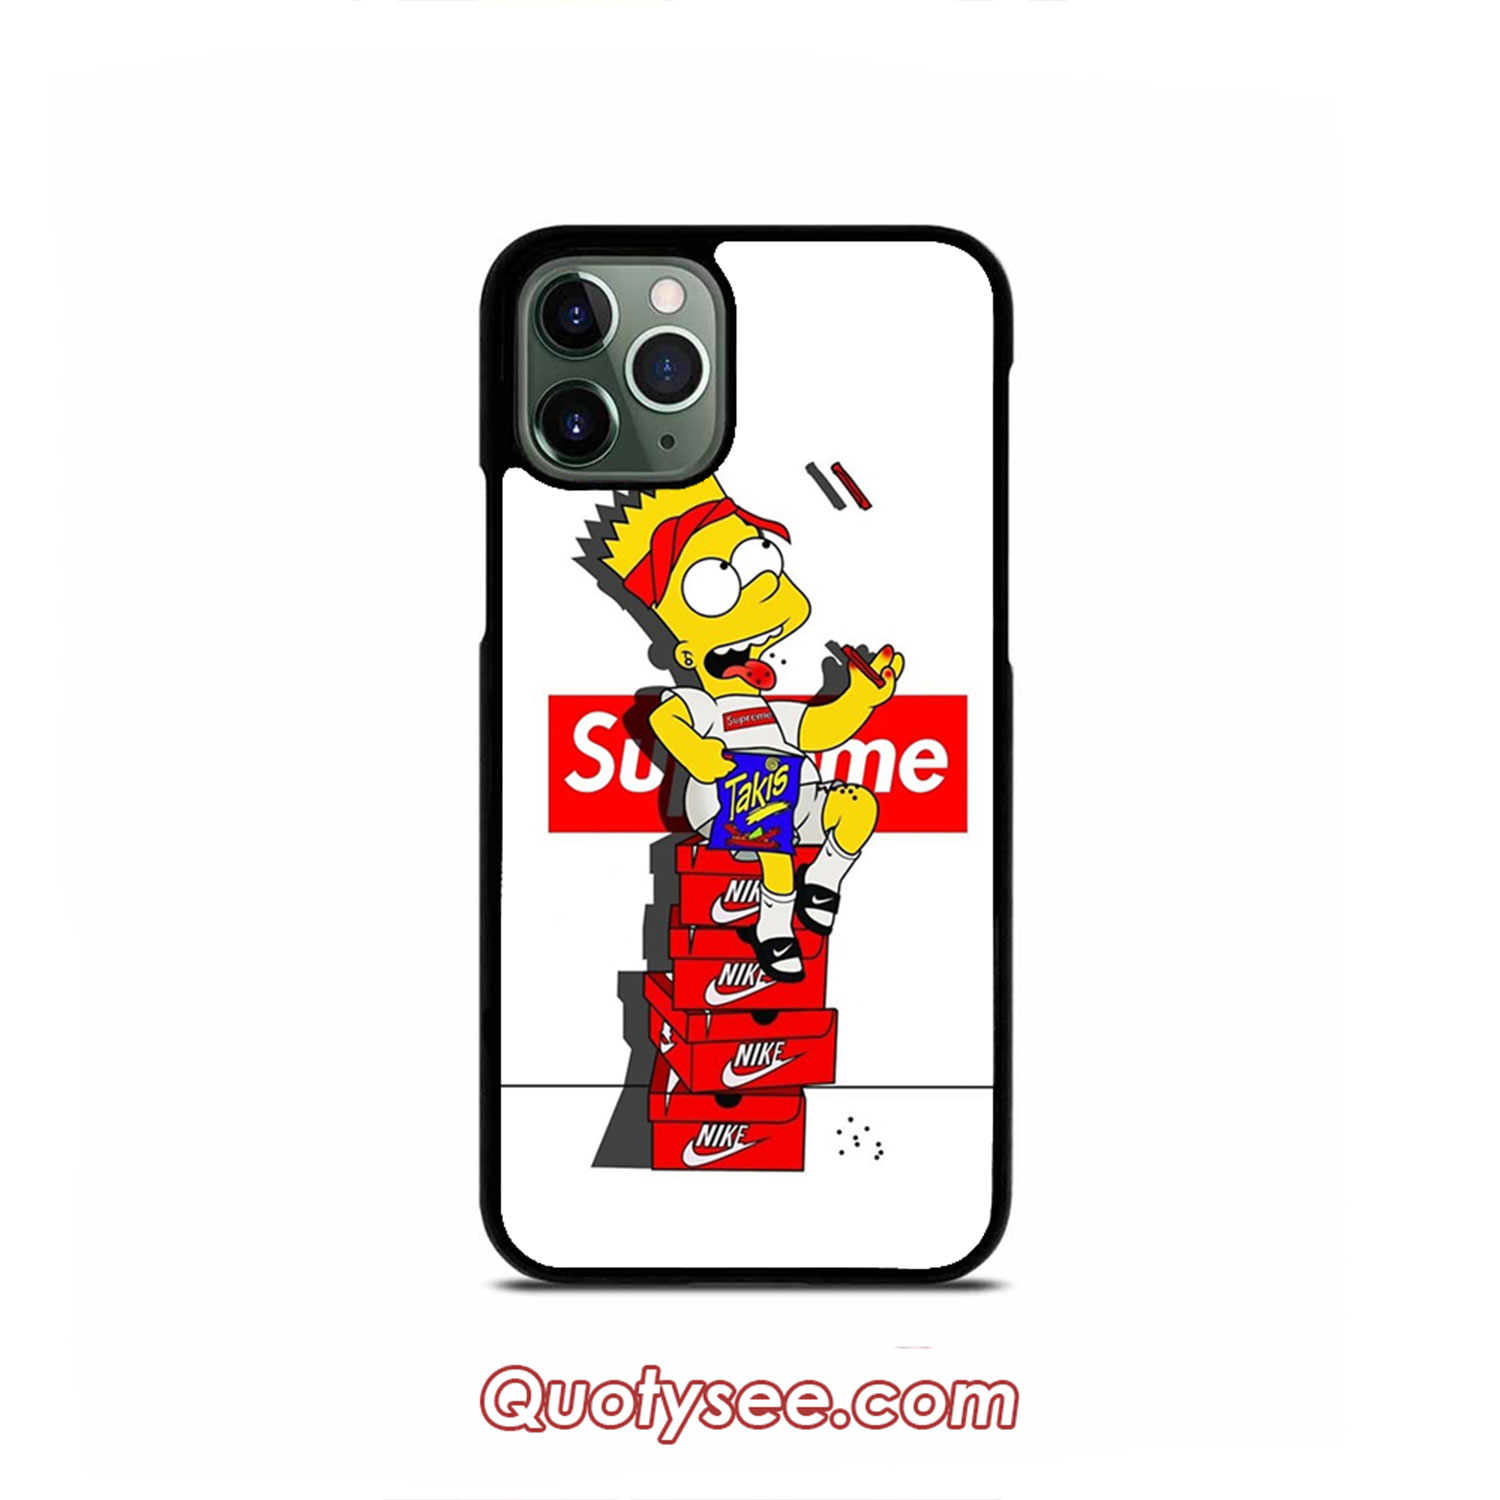 Case Bart Supreme - iPhone XR